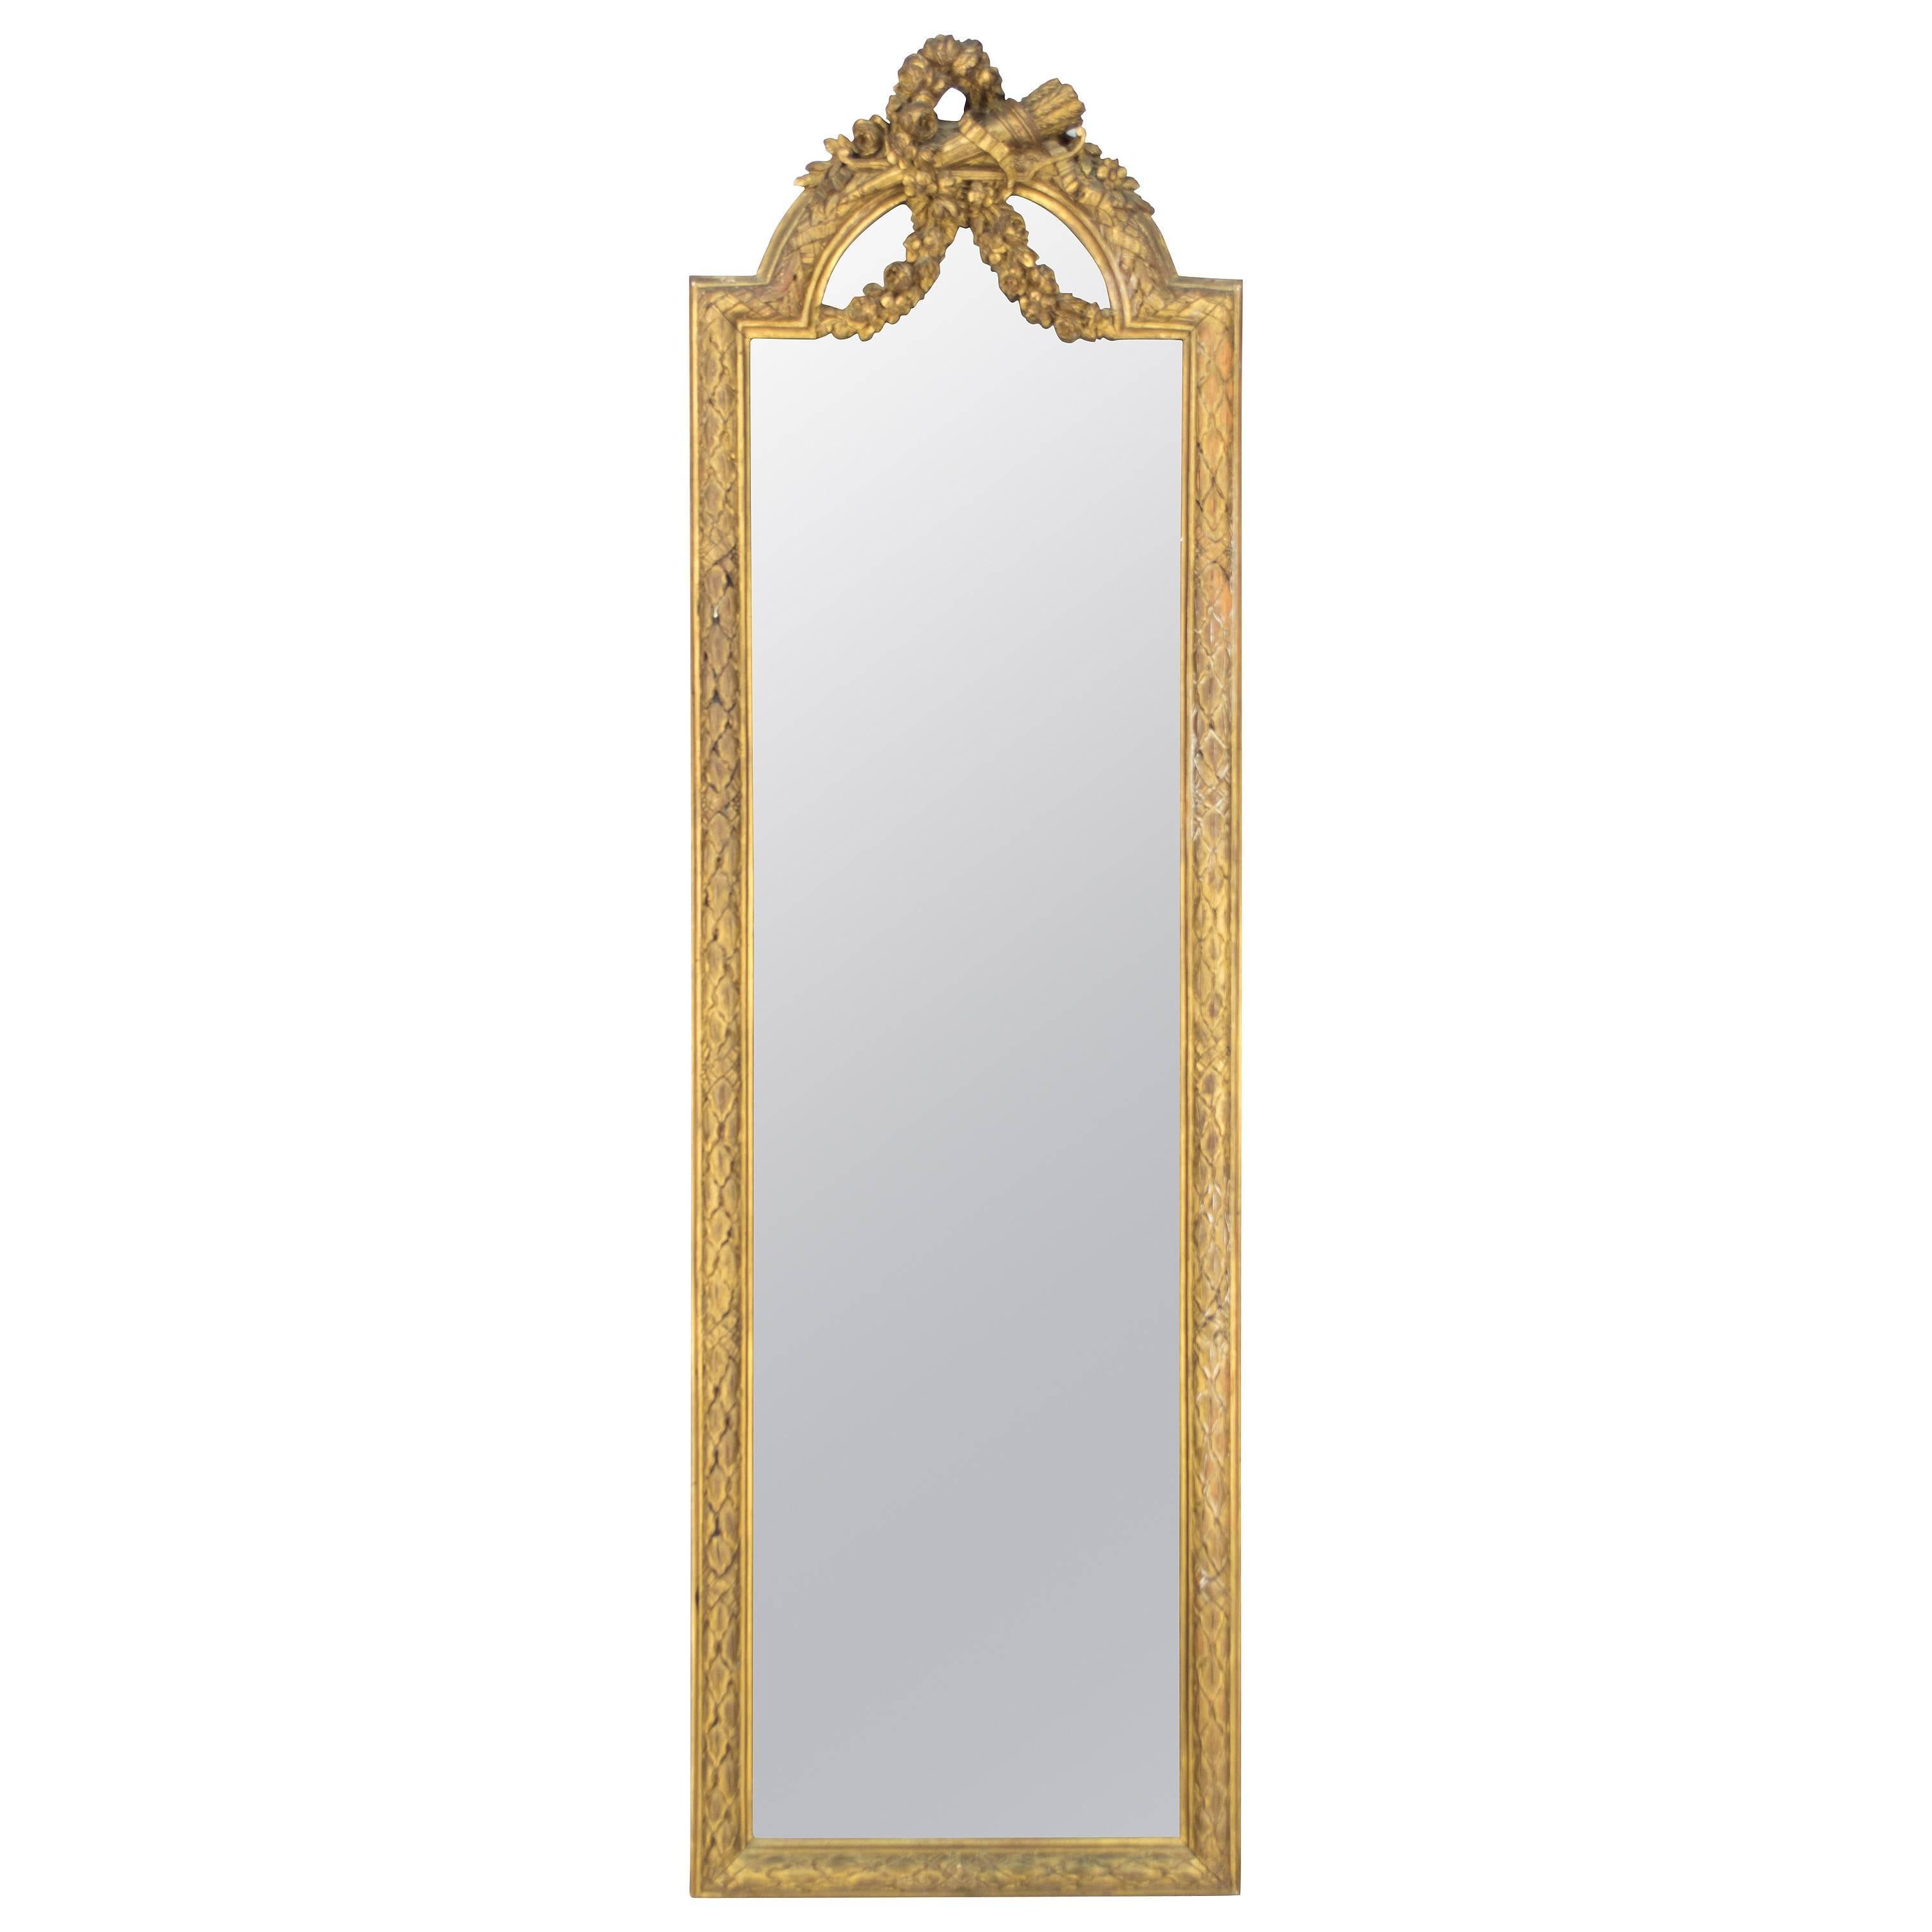 19th C. French Louis XVI Style Giltwood Mirror